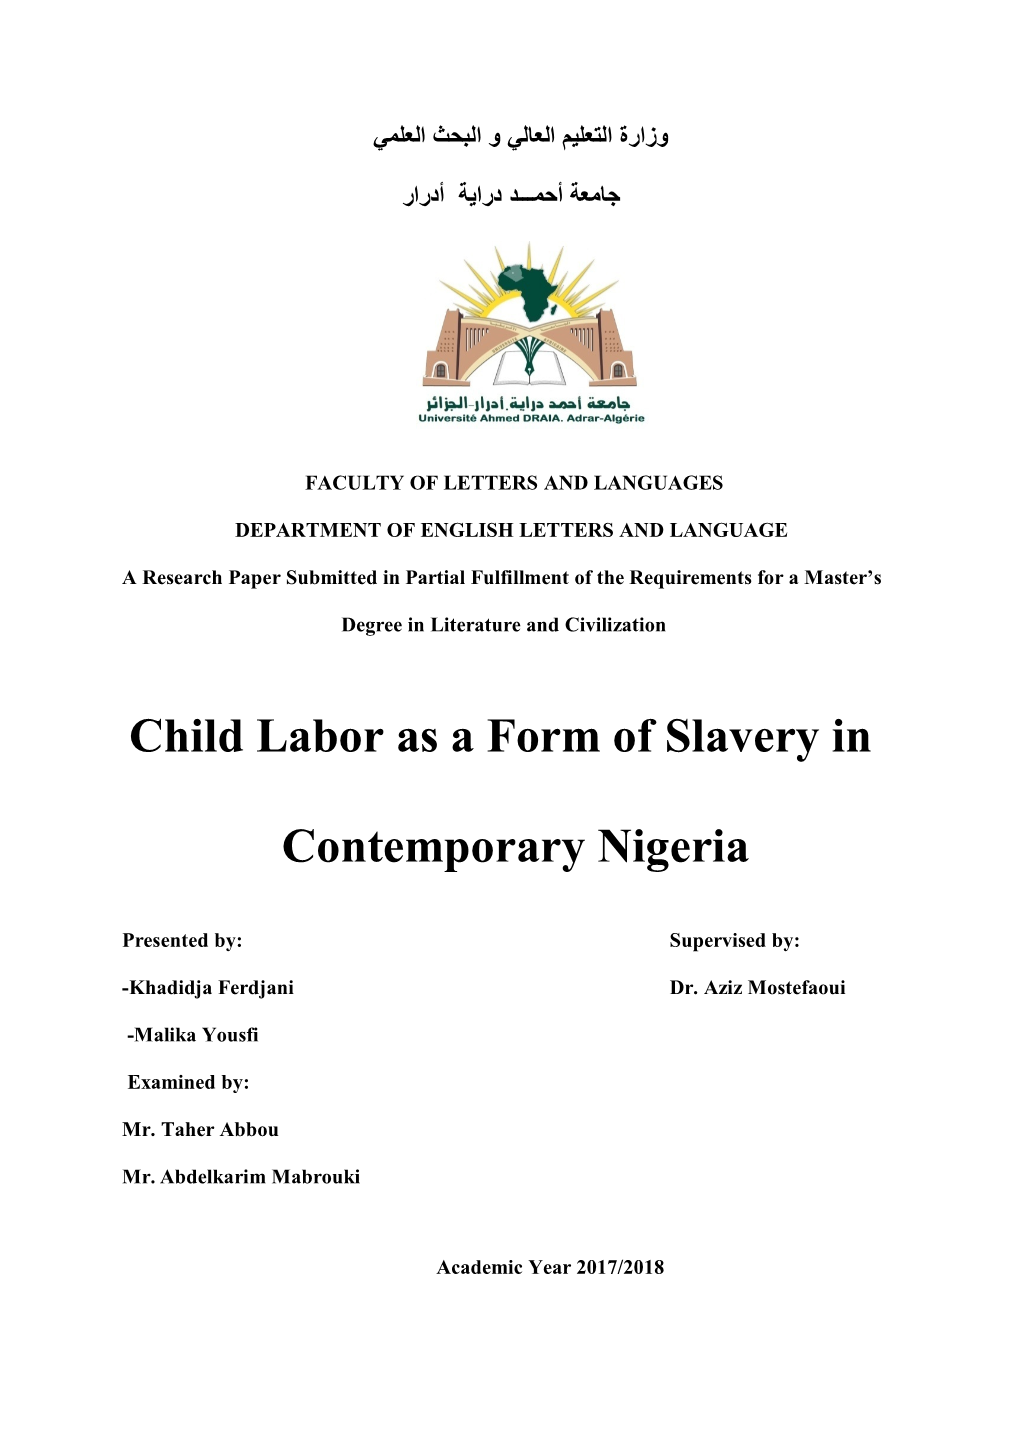 Child Labor As a Form of Slavery in Contemporary Nigeria